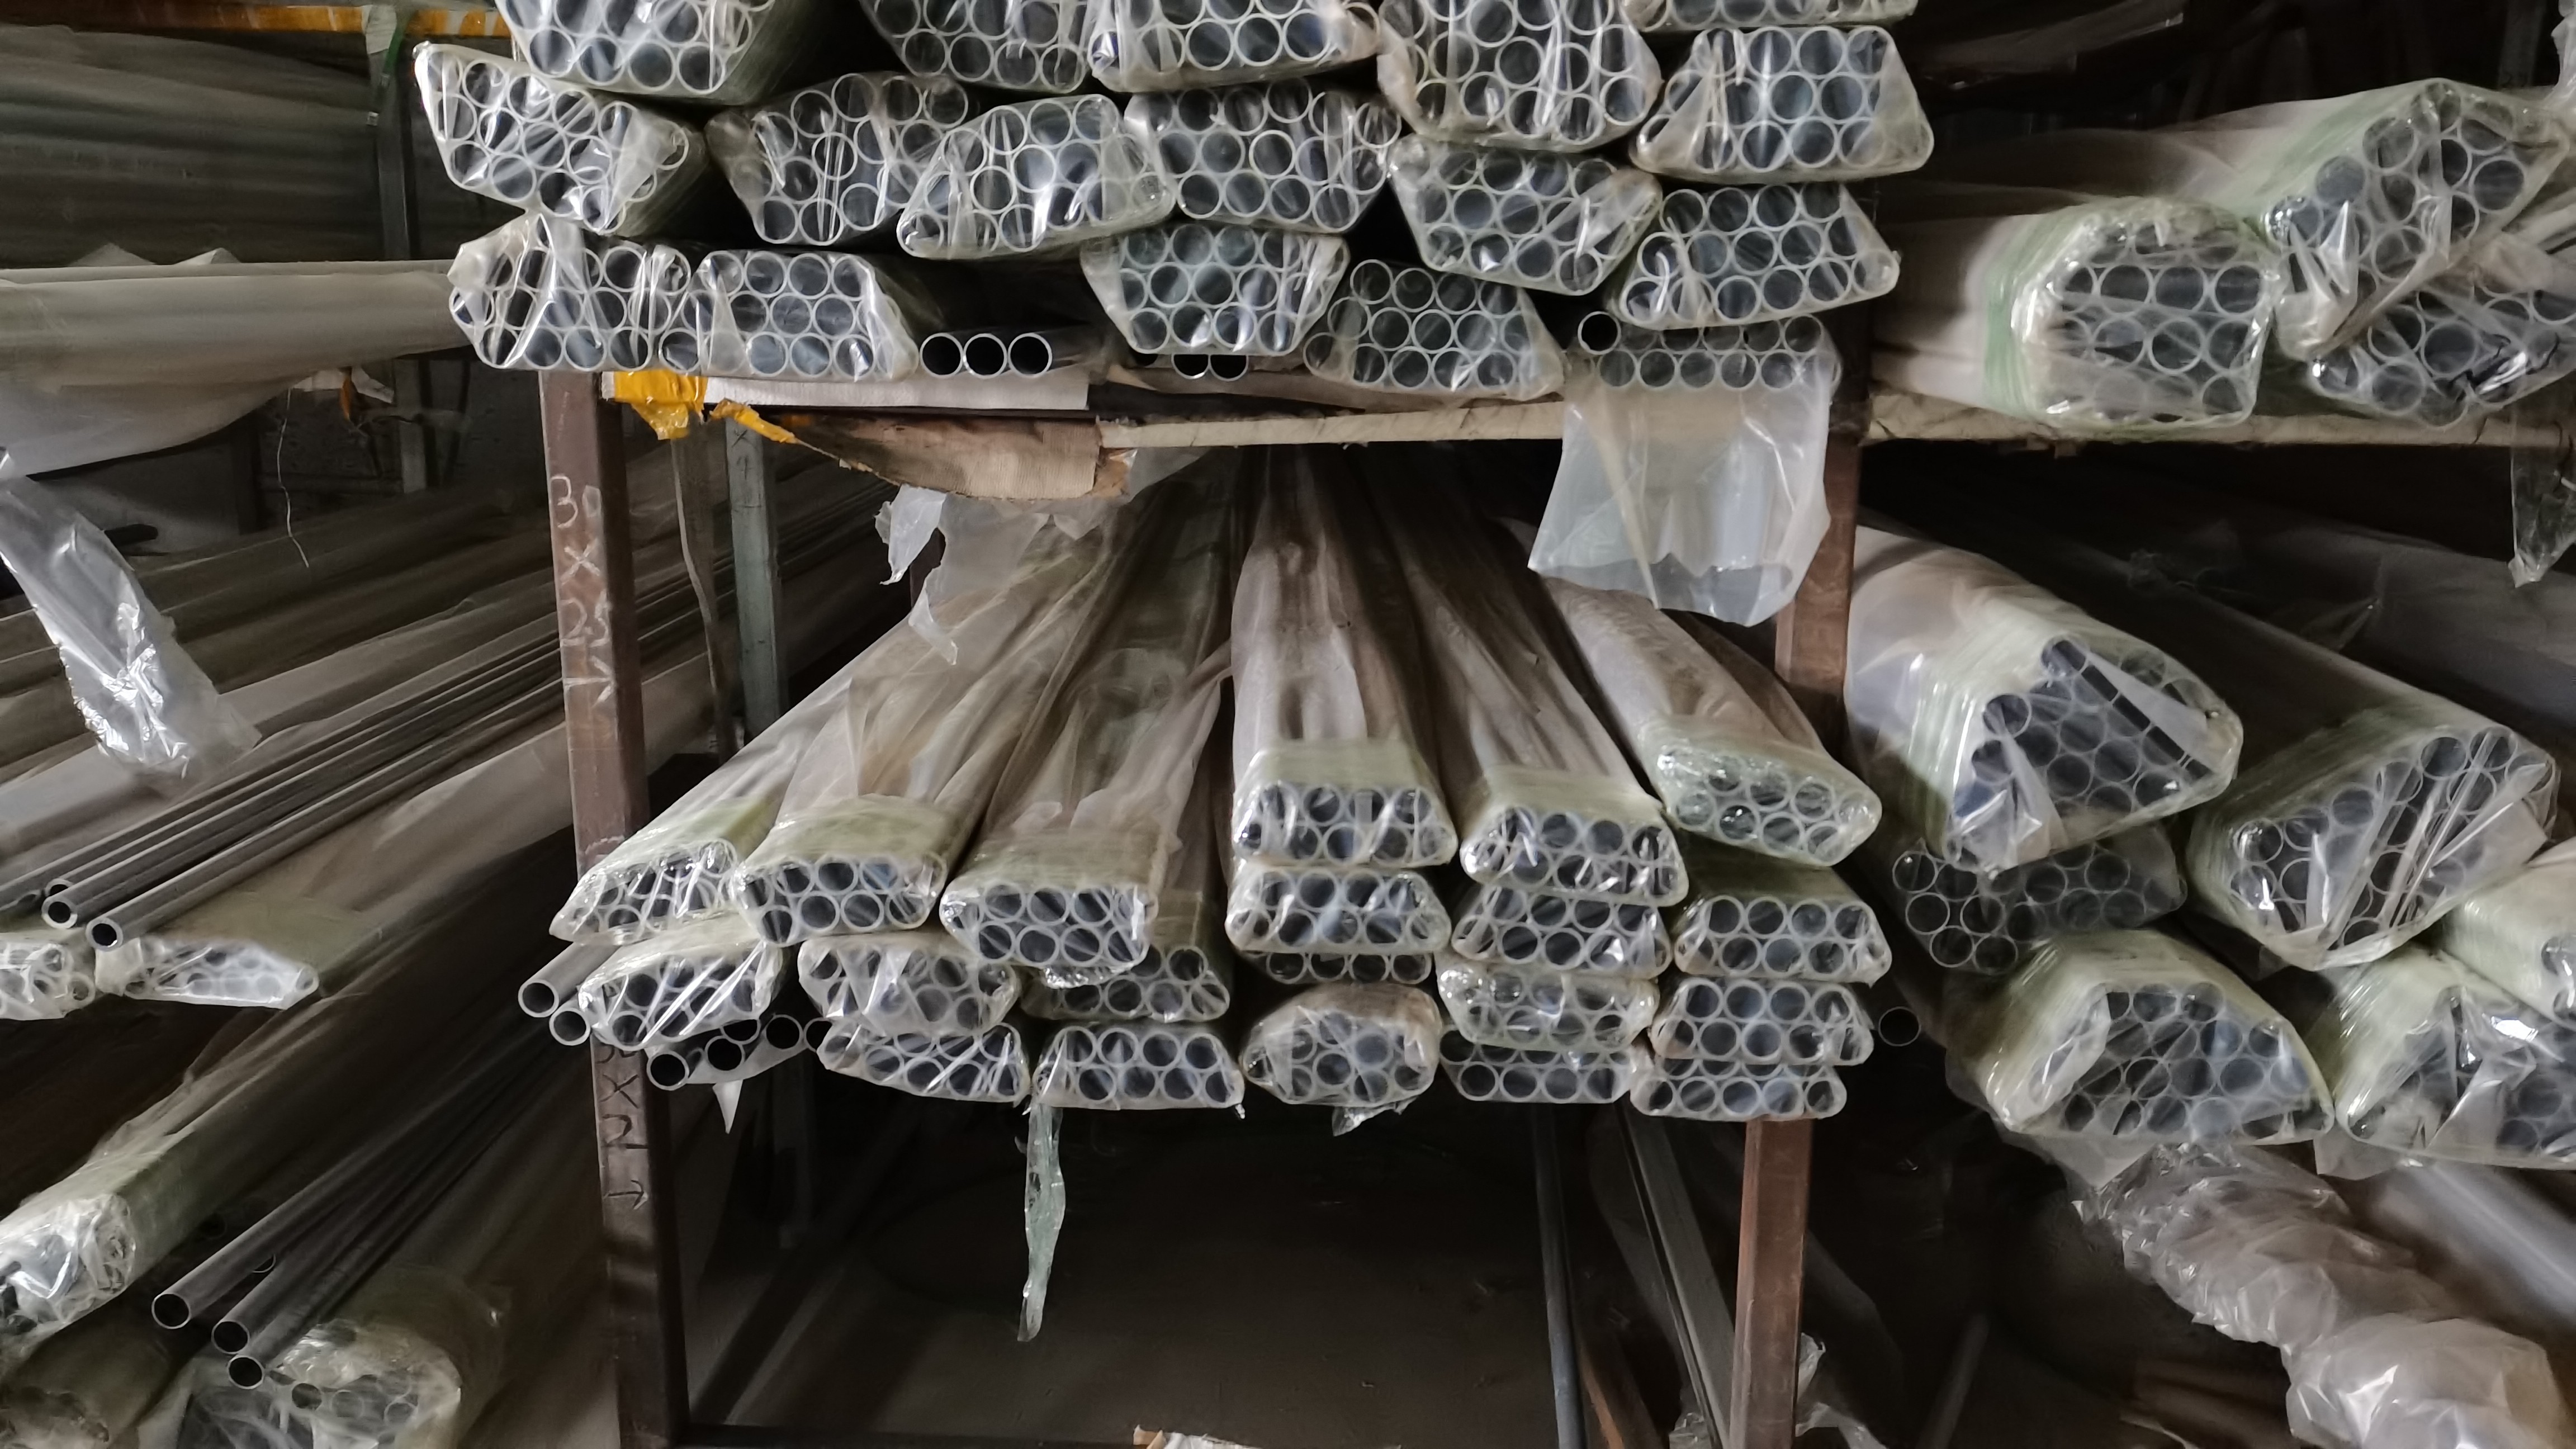 Export High Quality Customized Thick Wall Aluminium Tube/aluminium Pipes Tubes